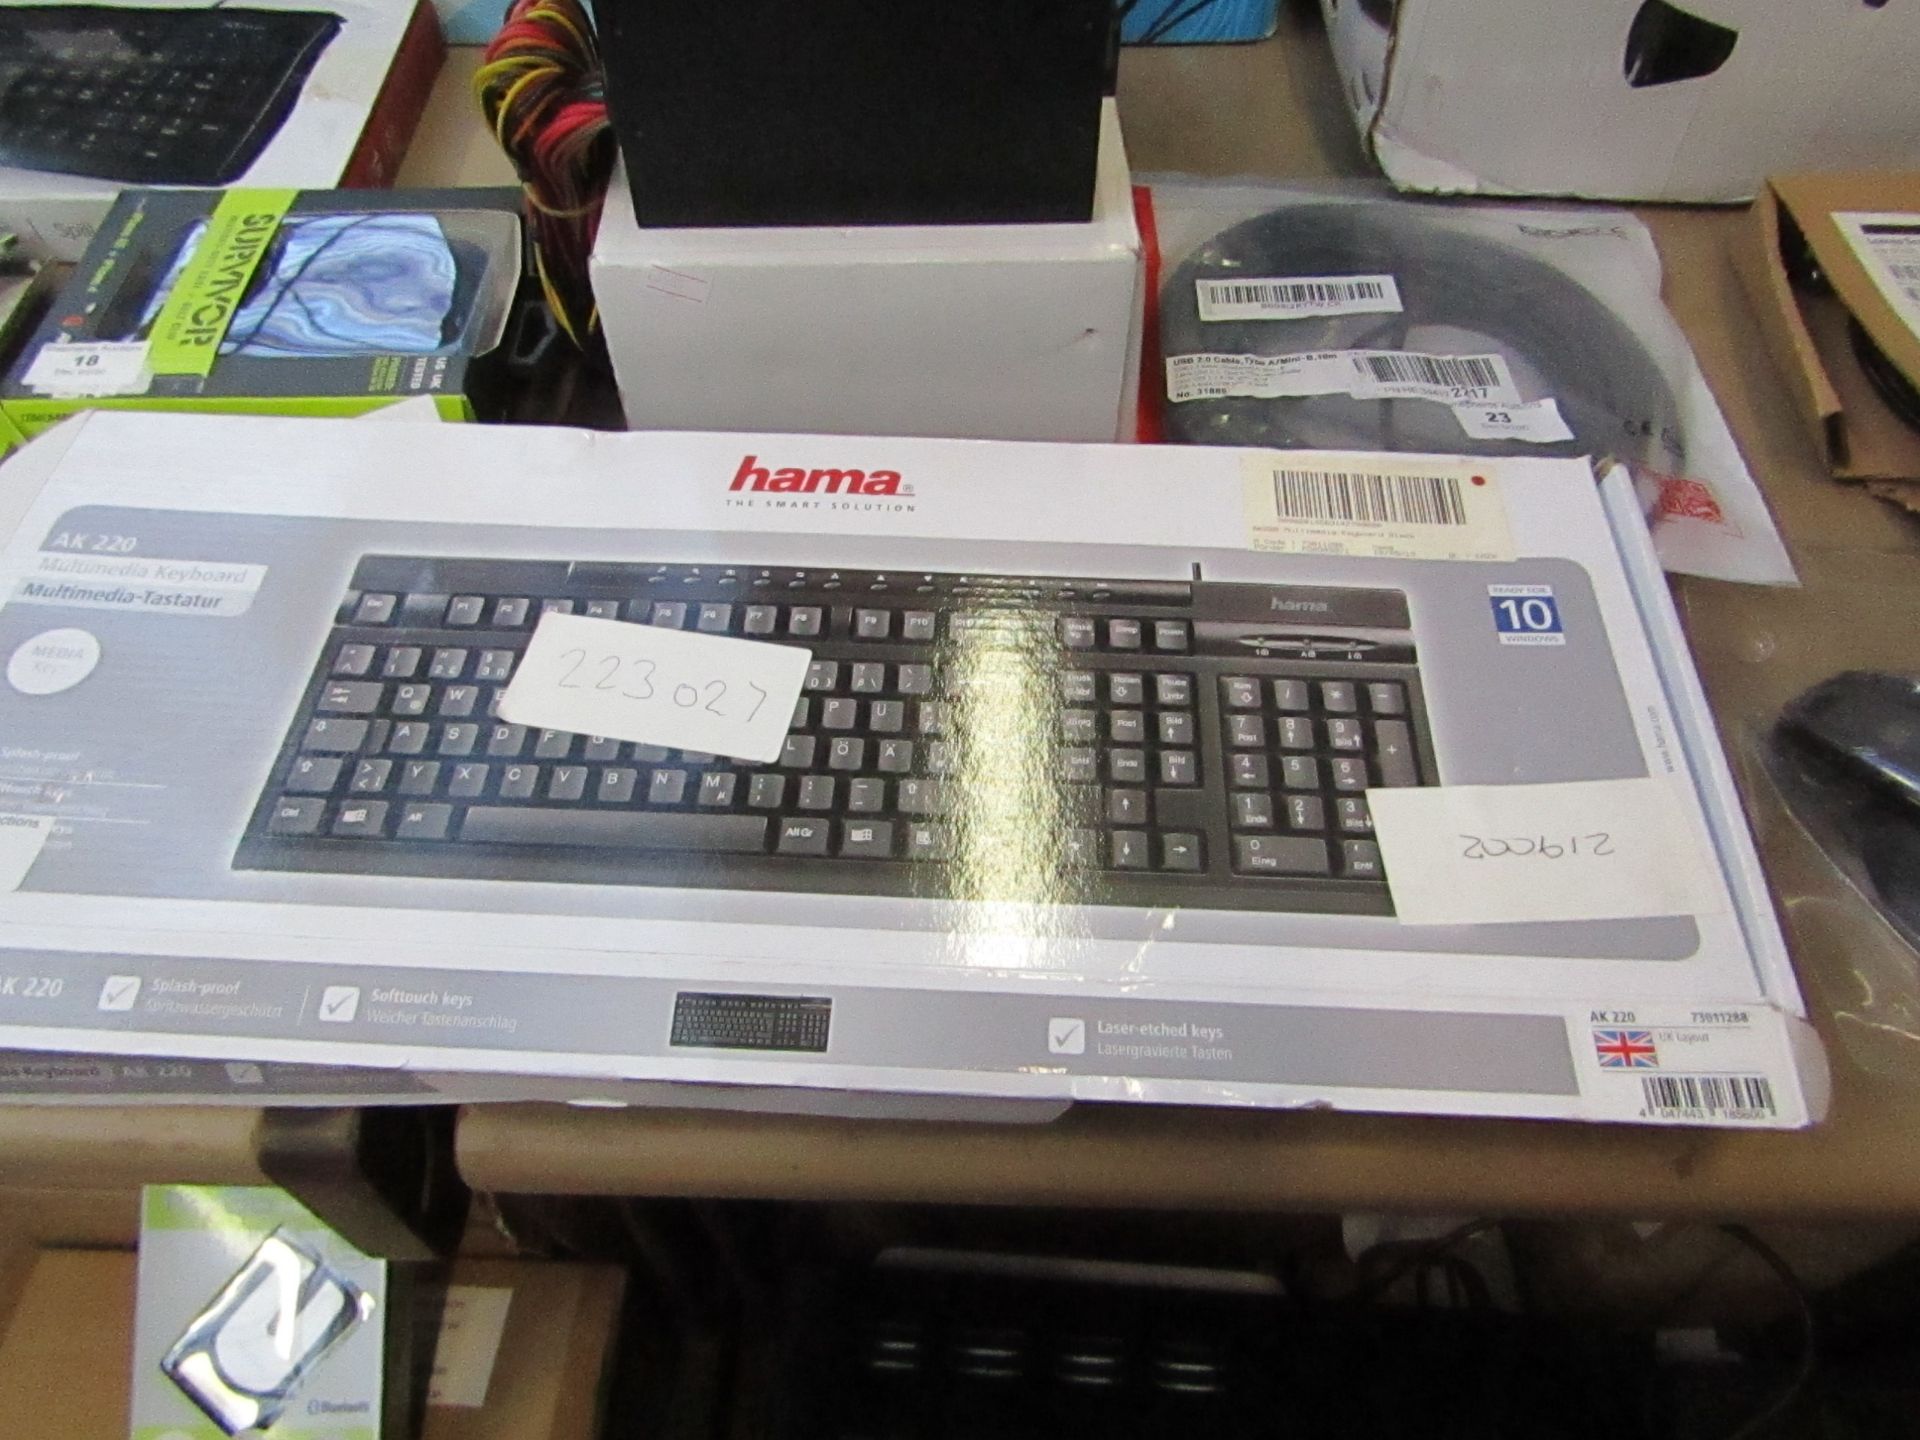 HAMA - Multimedia keyboard AK220 - Untested and boxed.